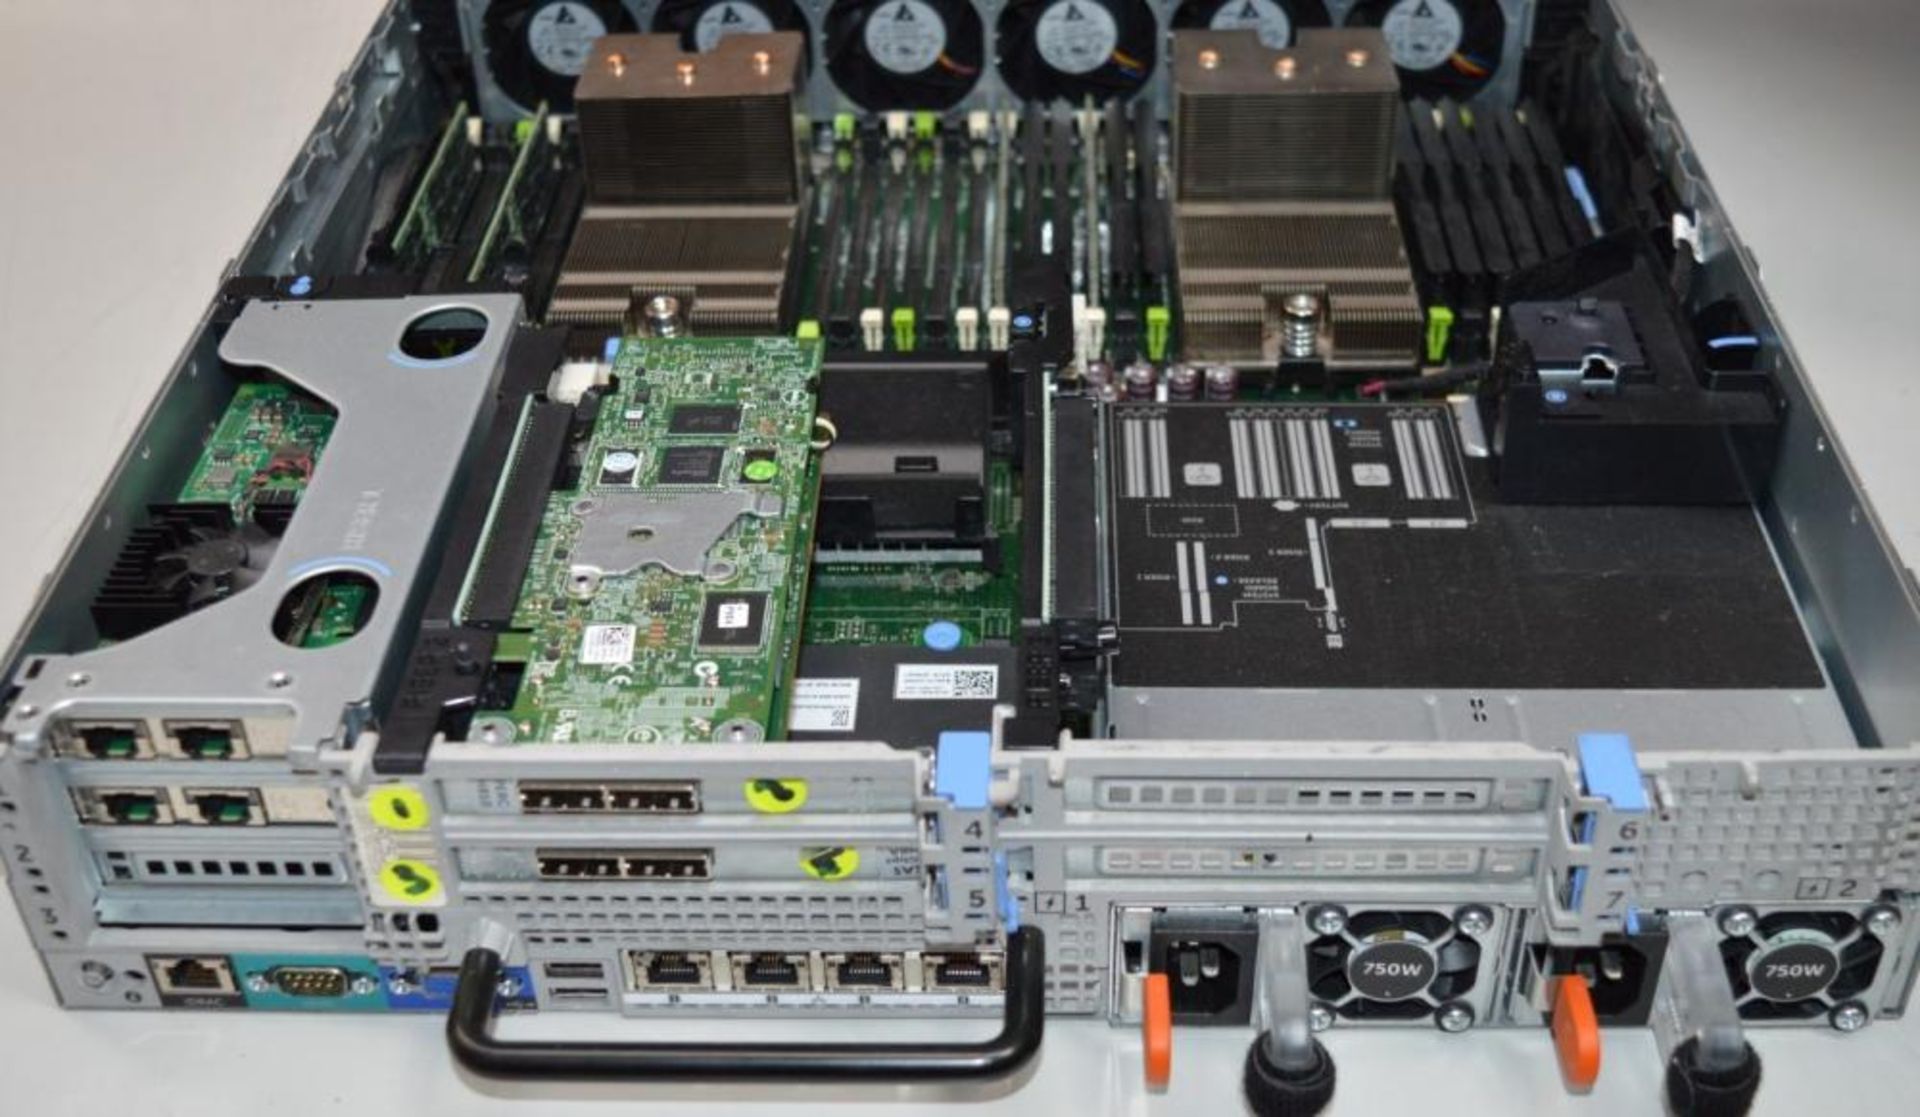 1 x Dell Power Edge R720 Rack Server - 2 x Intel Xeon E5-2630 Six Core Processors, 32gb DDR3 Ram - Bild 2 aus 5